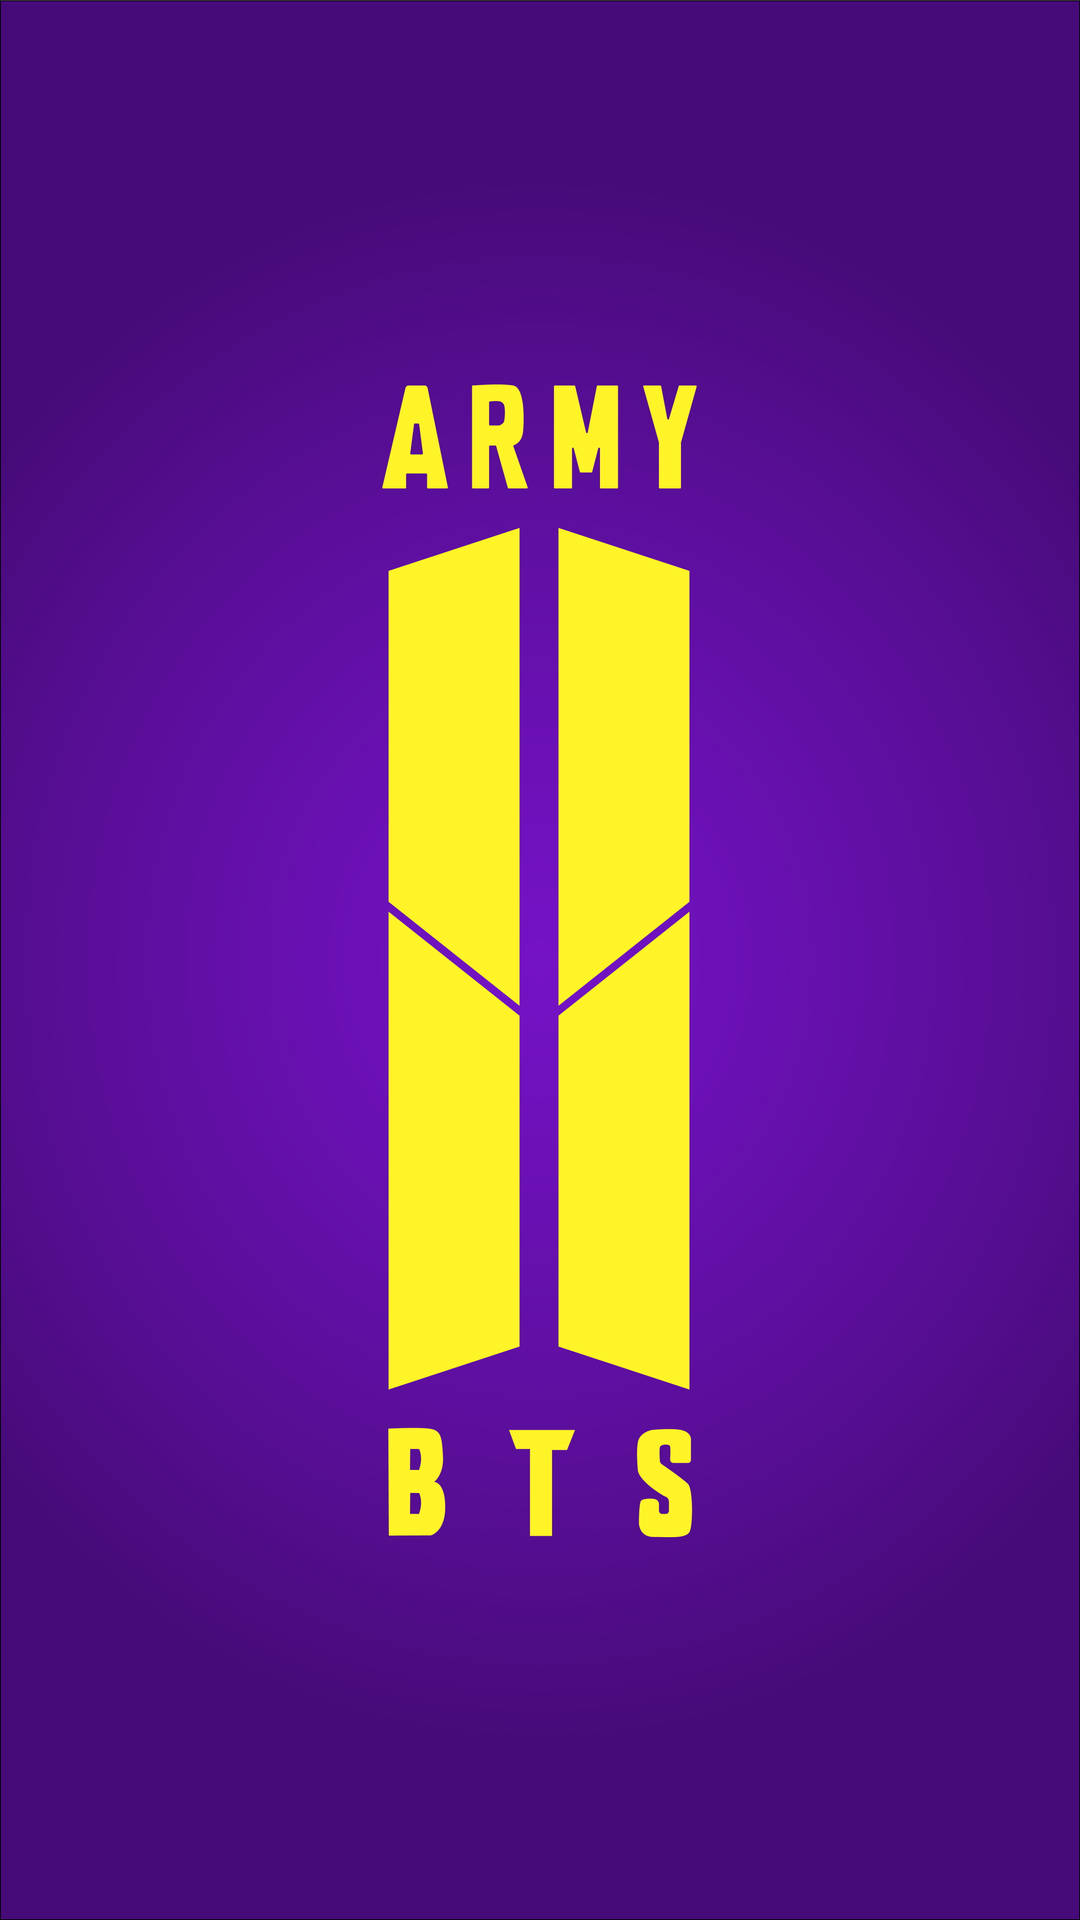 Yellow Bts Army Emblem Background